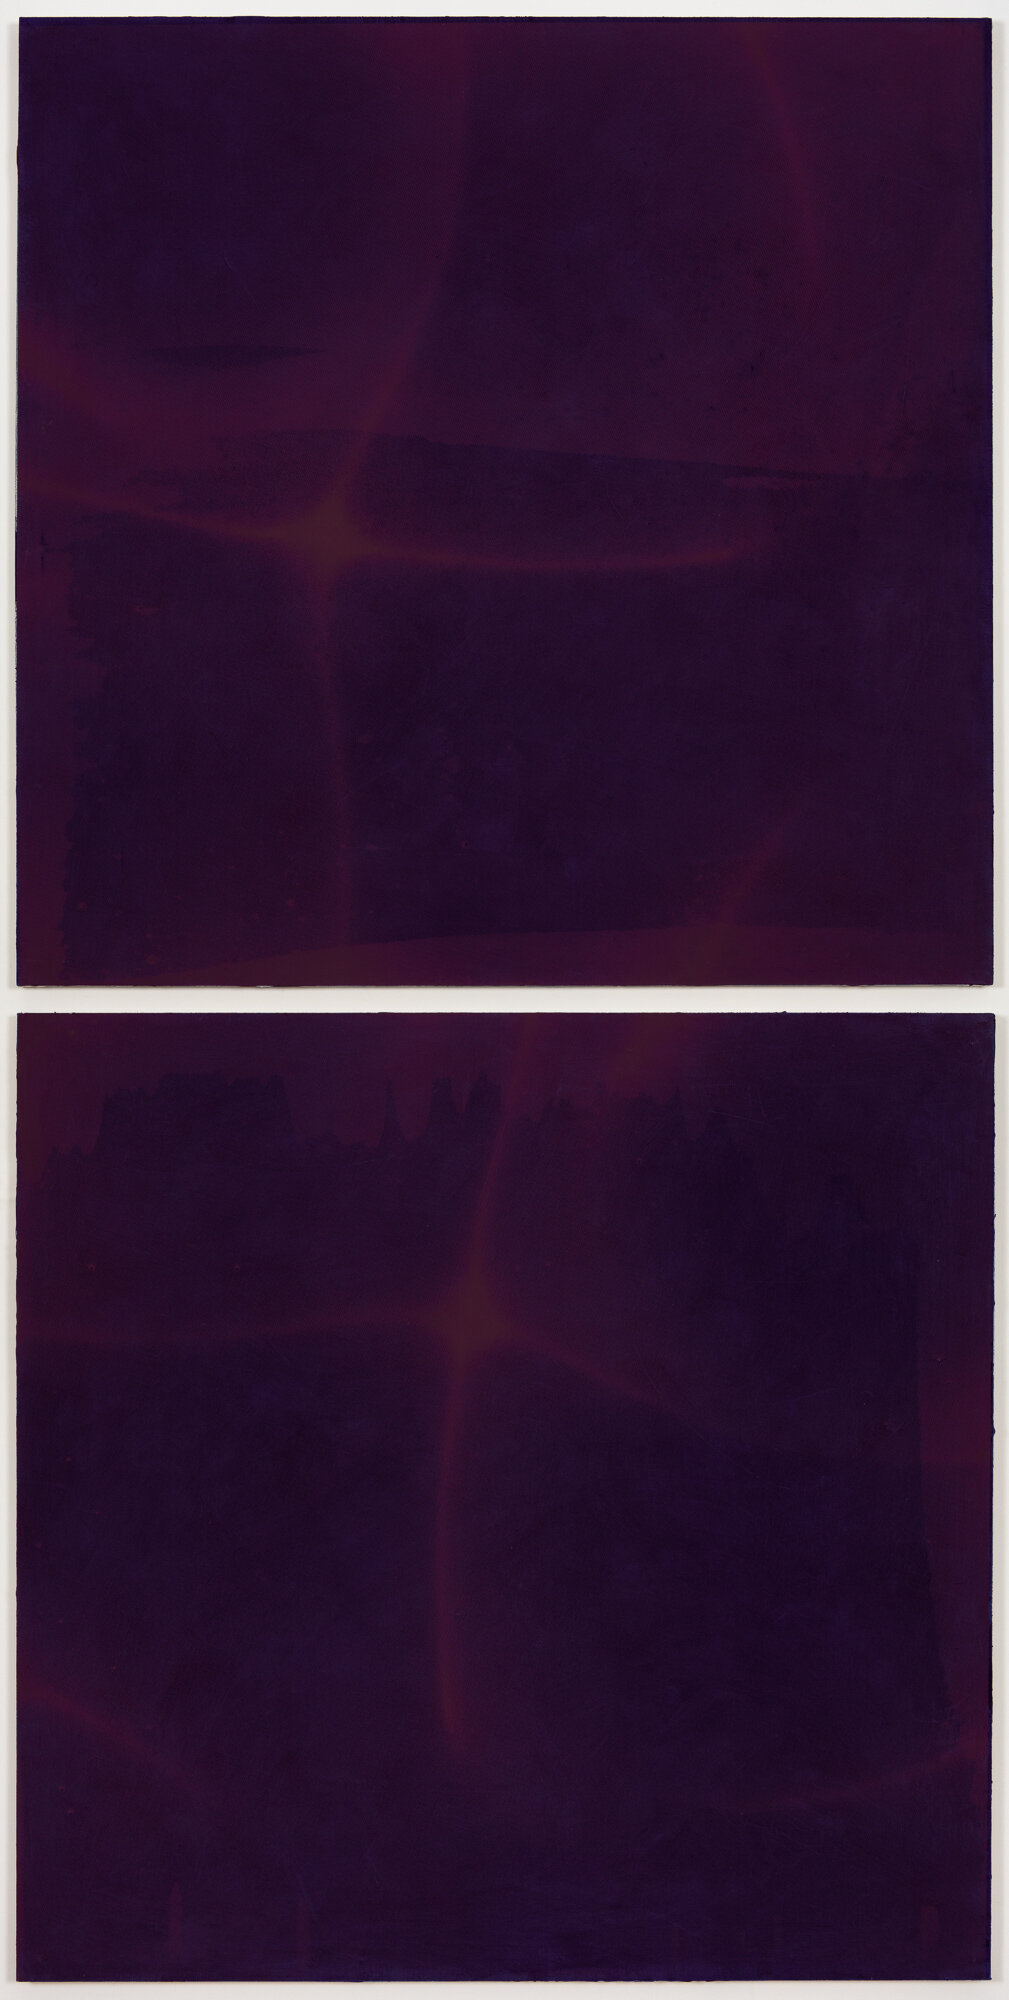 SLIDE 5 1. BREYER P-ORRIDGE_ HEISTUntitled (purple diptych),2019Candy Factory II,Silkscreen on two muslin panels90x44x1.5in.jpg